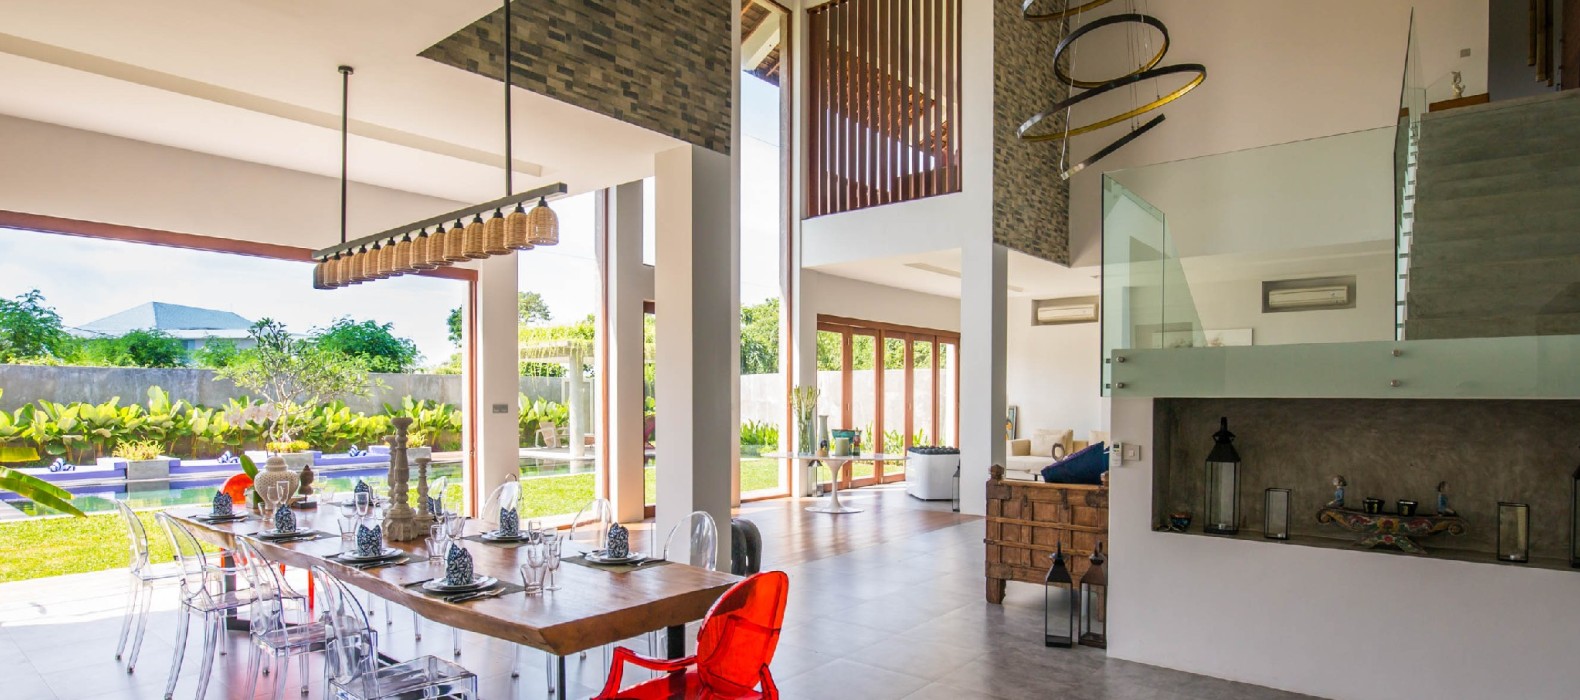 Dining area of Villa Delfino in Bali